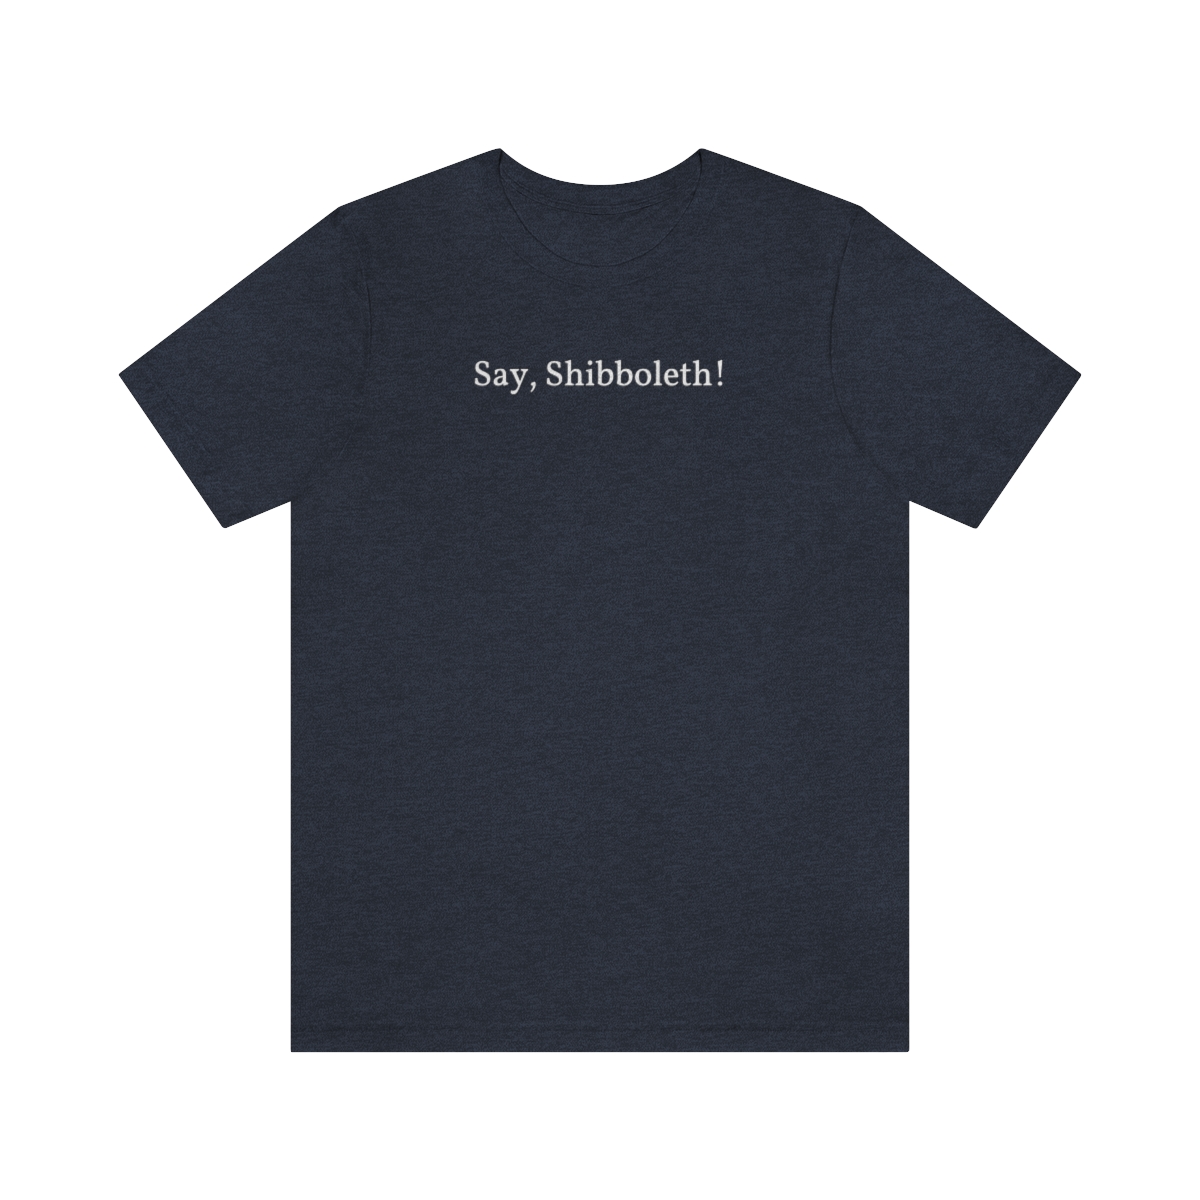 Say, Shibboleth! Christian t-shirt @ doyoubelieveinheaven.com